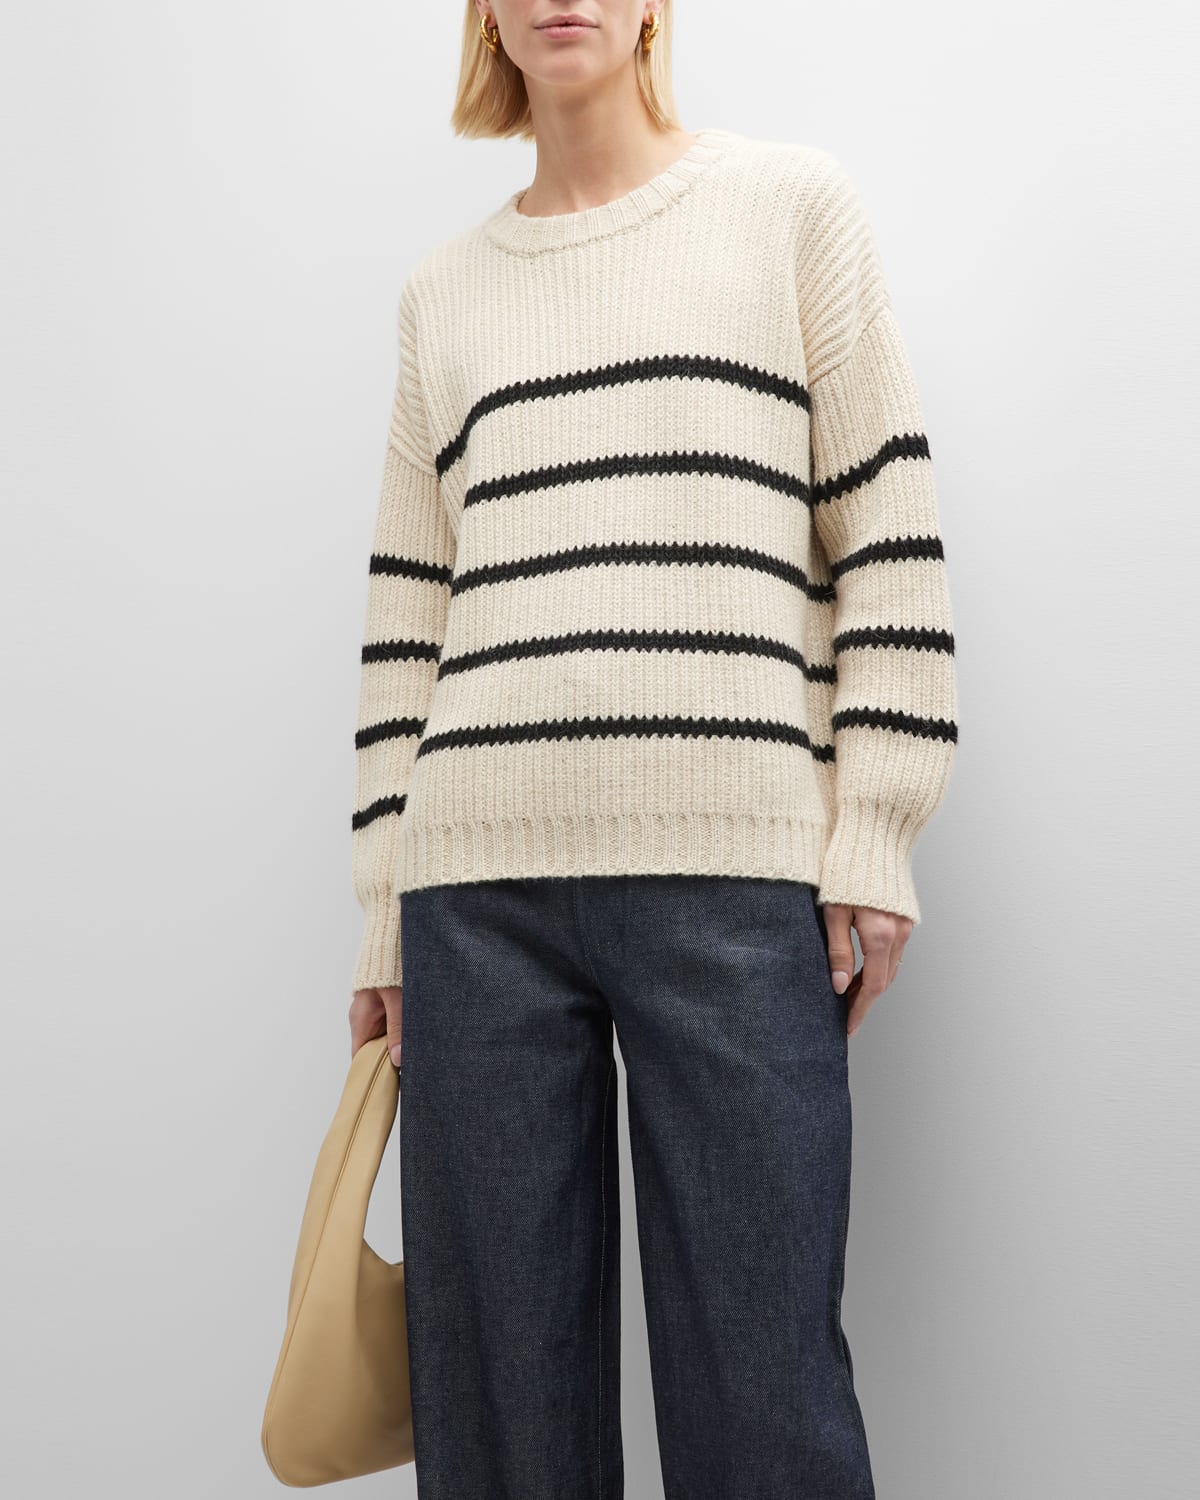 LAUDE the Label Field Drop-Shoulder Knit Sweater